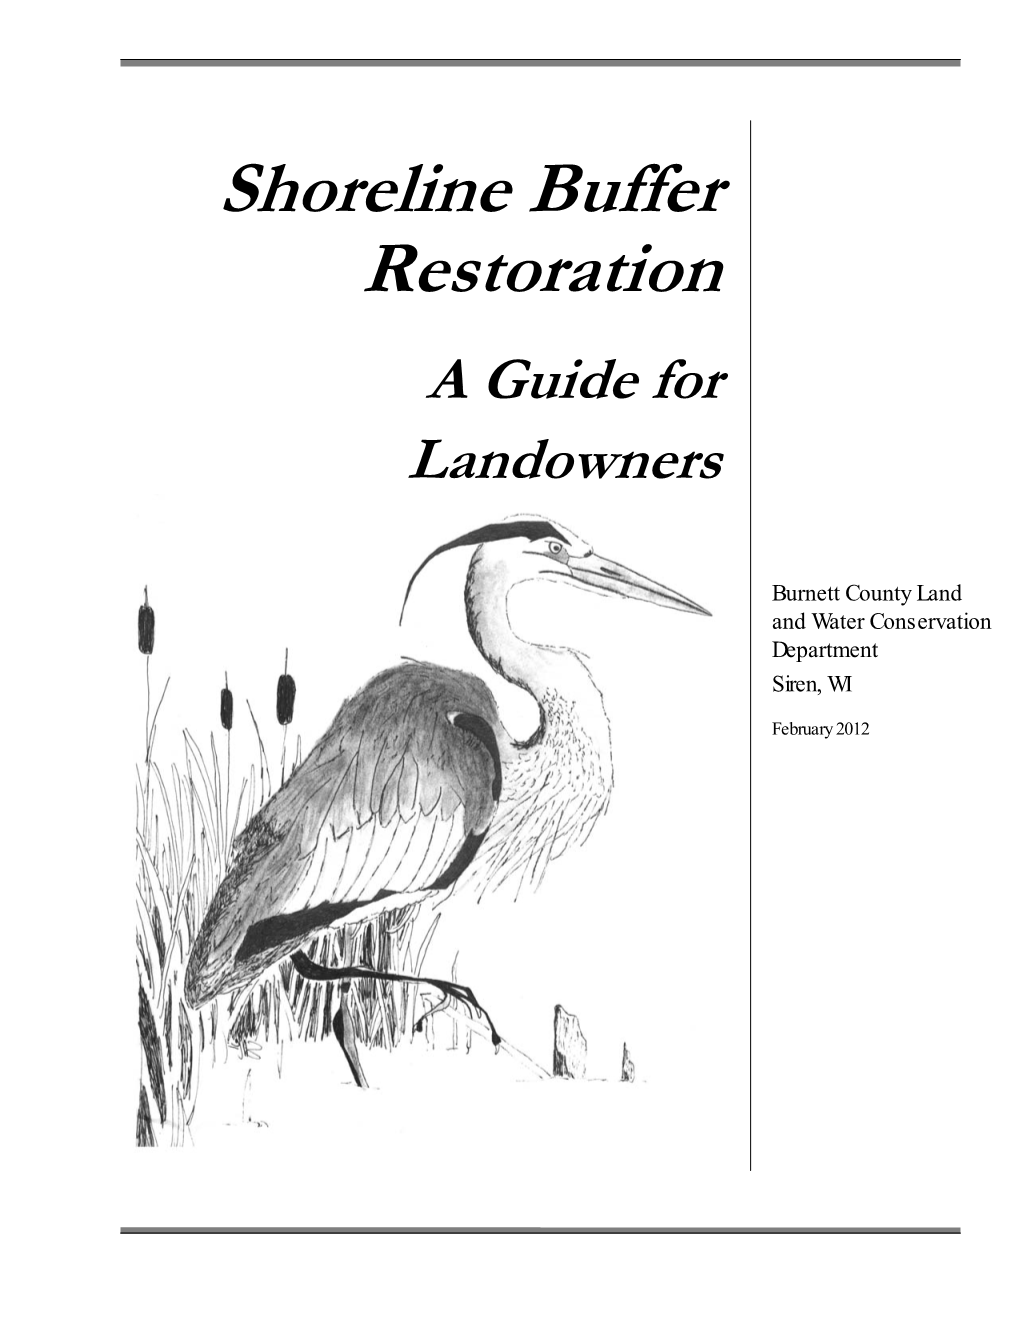 Shoreline Buffer Restoration a Guide for Landowners